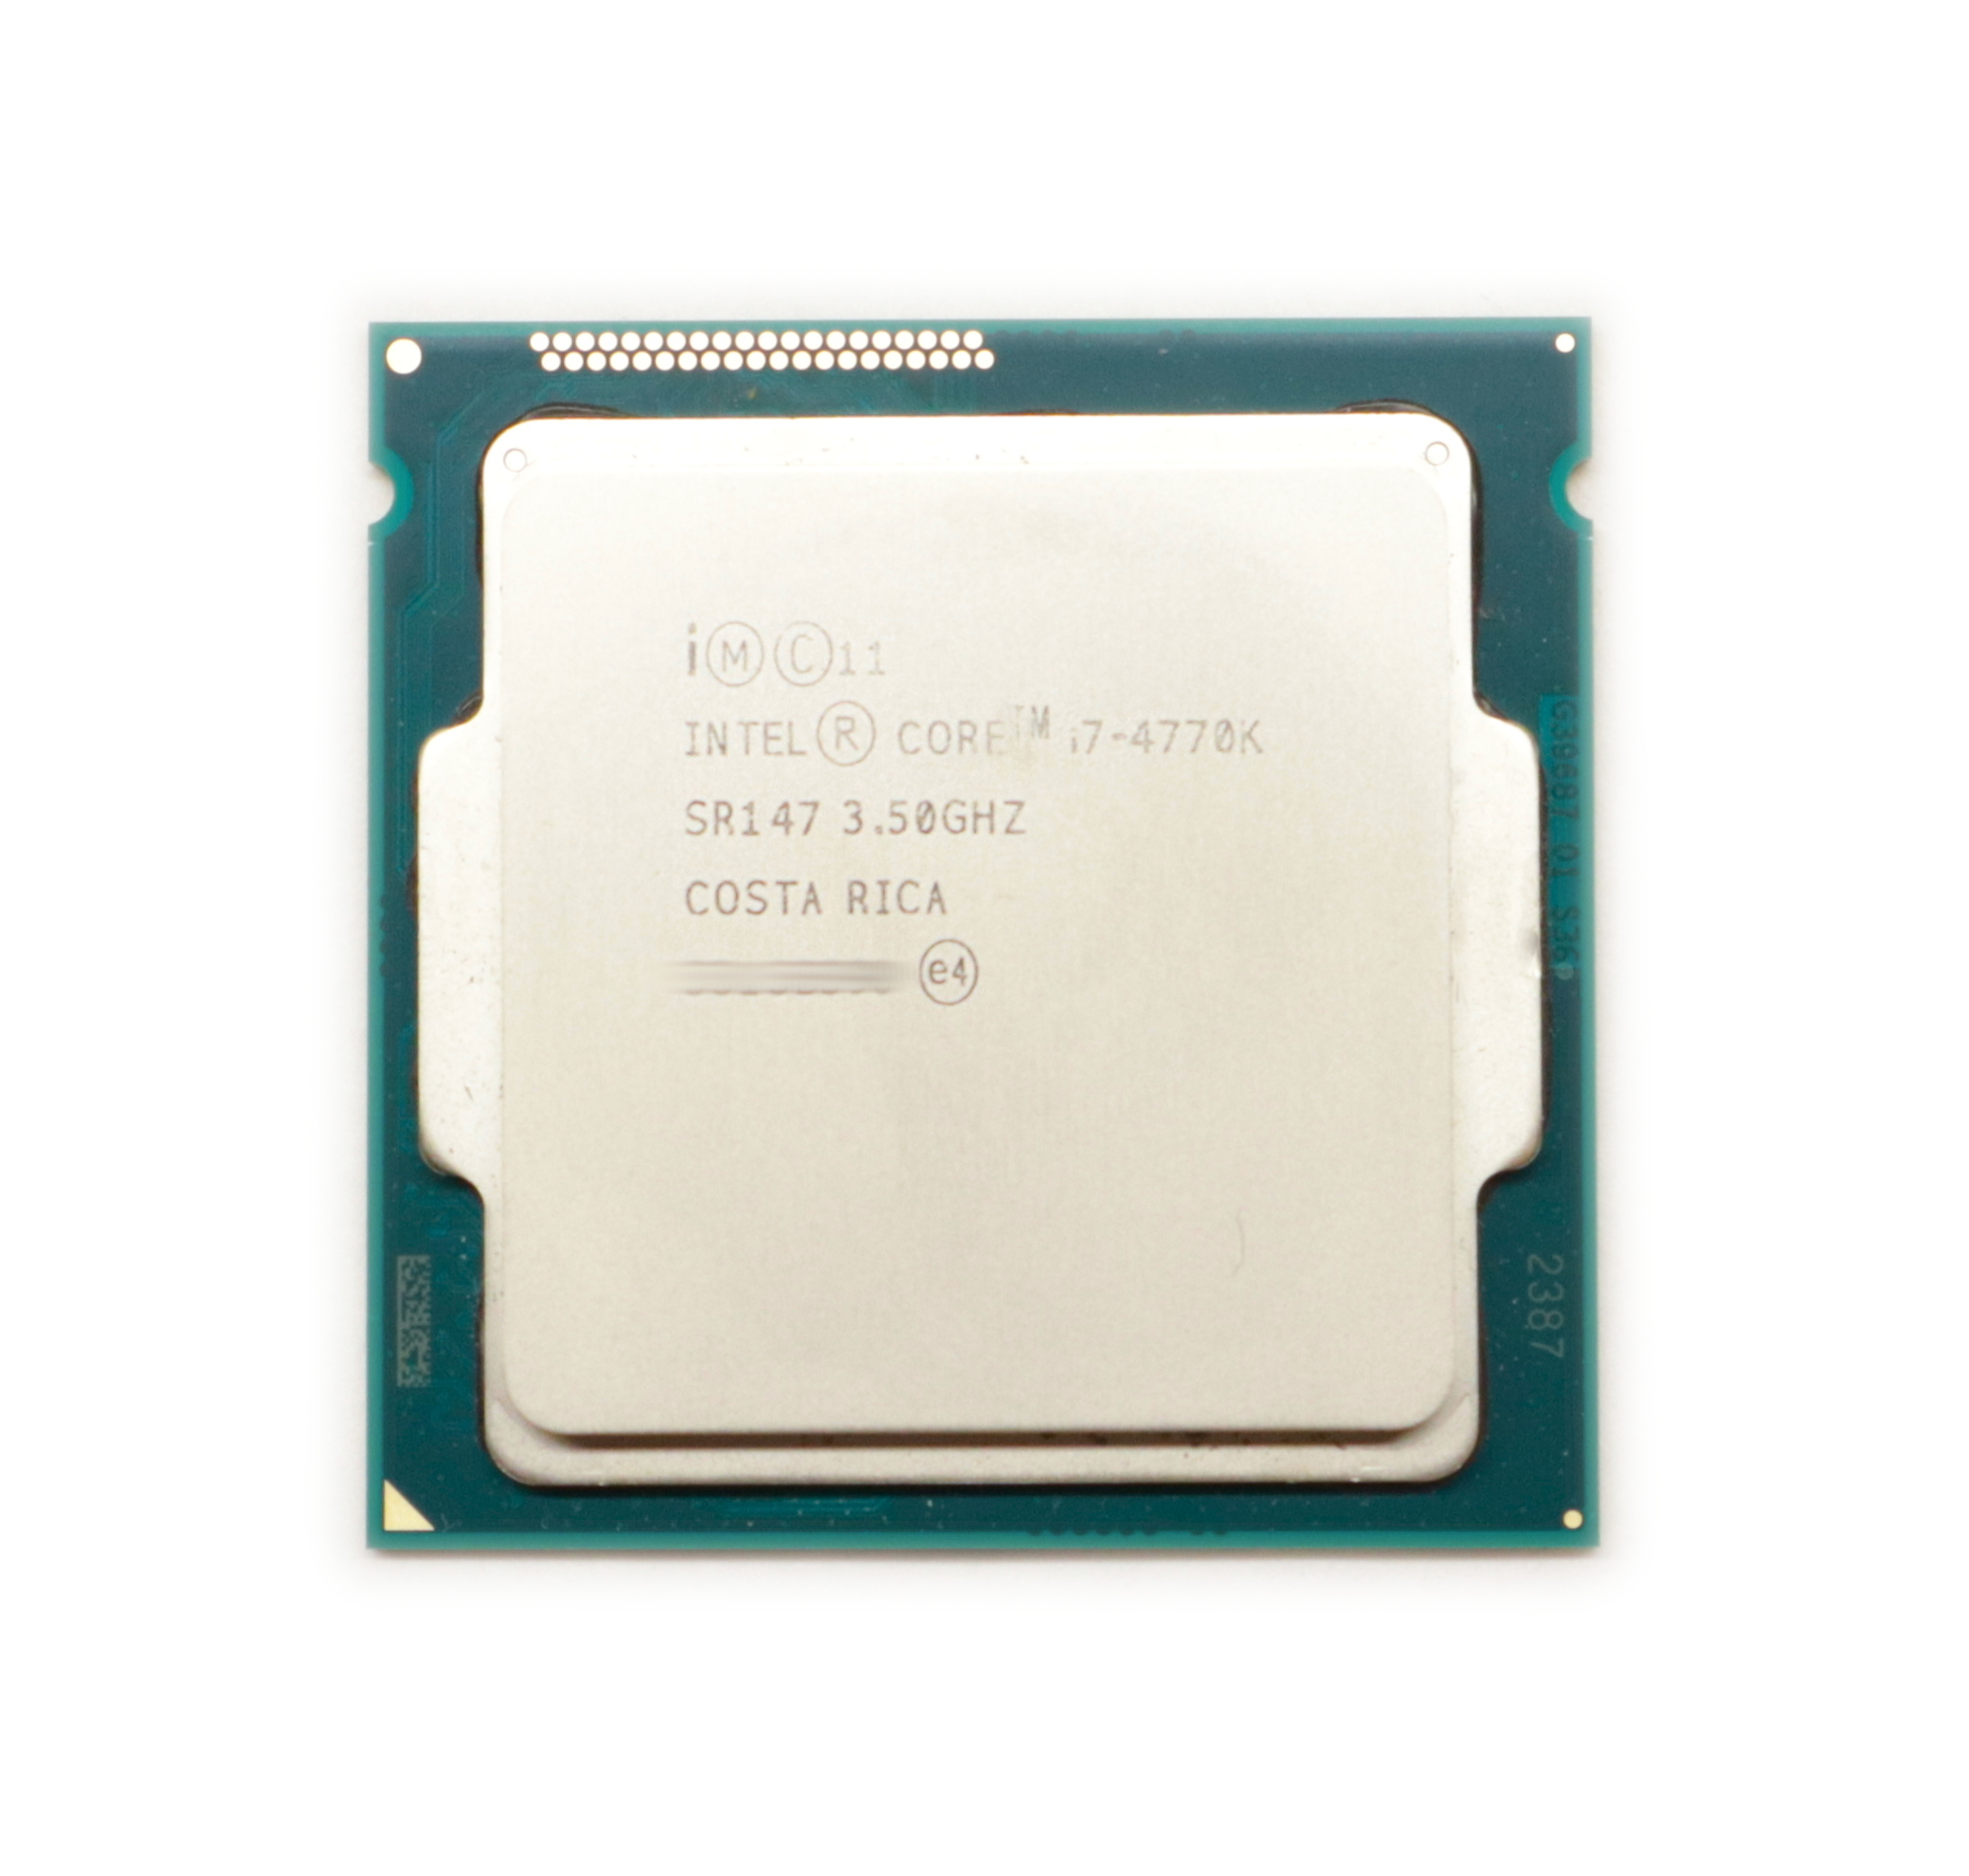 Intel Core i7-4770K 3.5GHz 8M Cache Sockets FCLGA1150 SR147